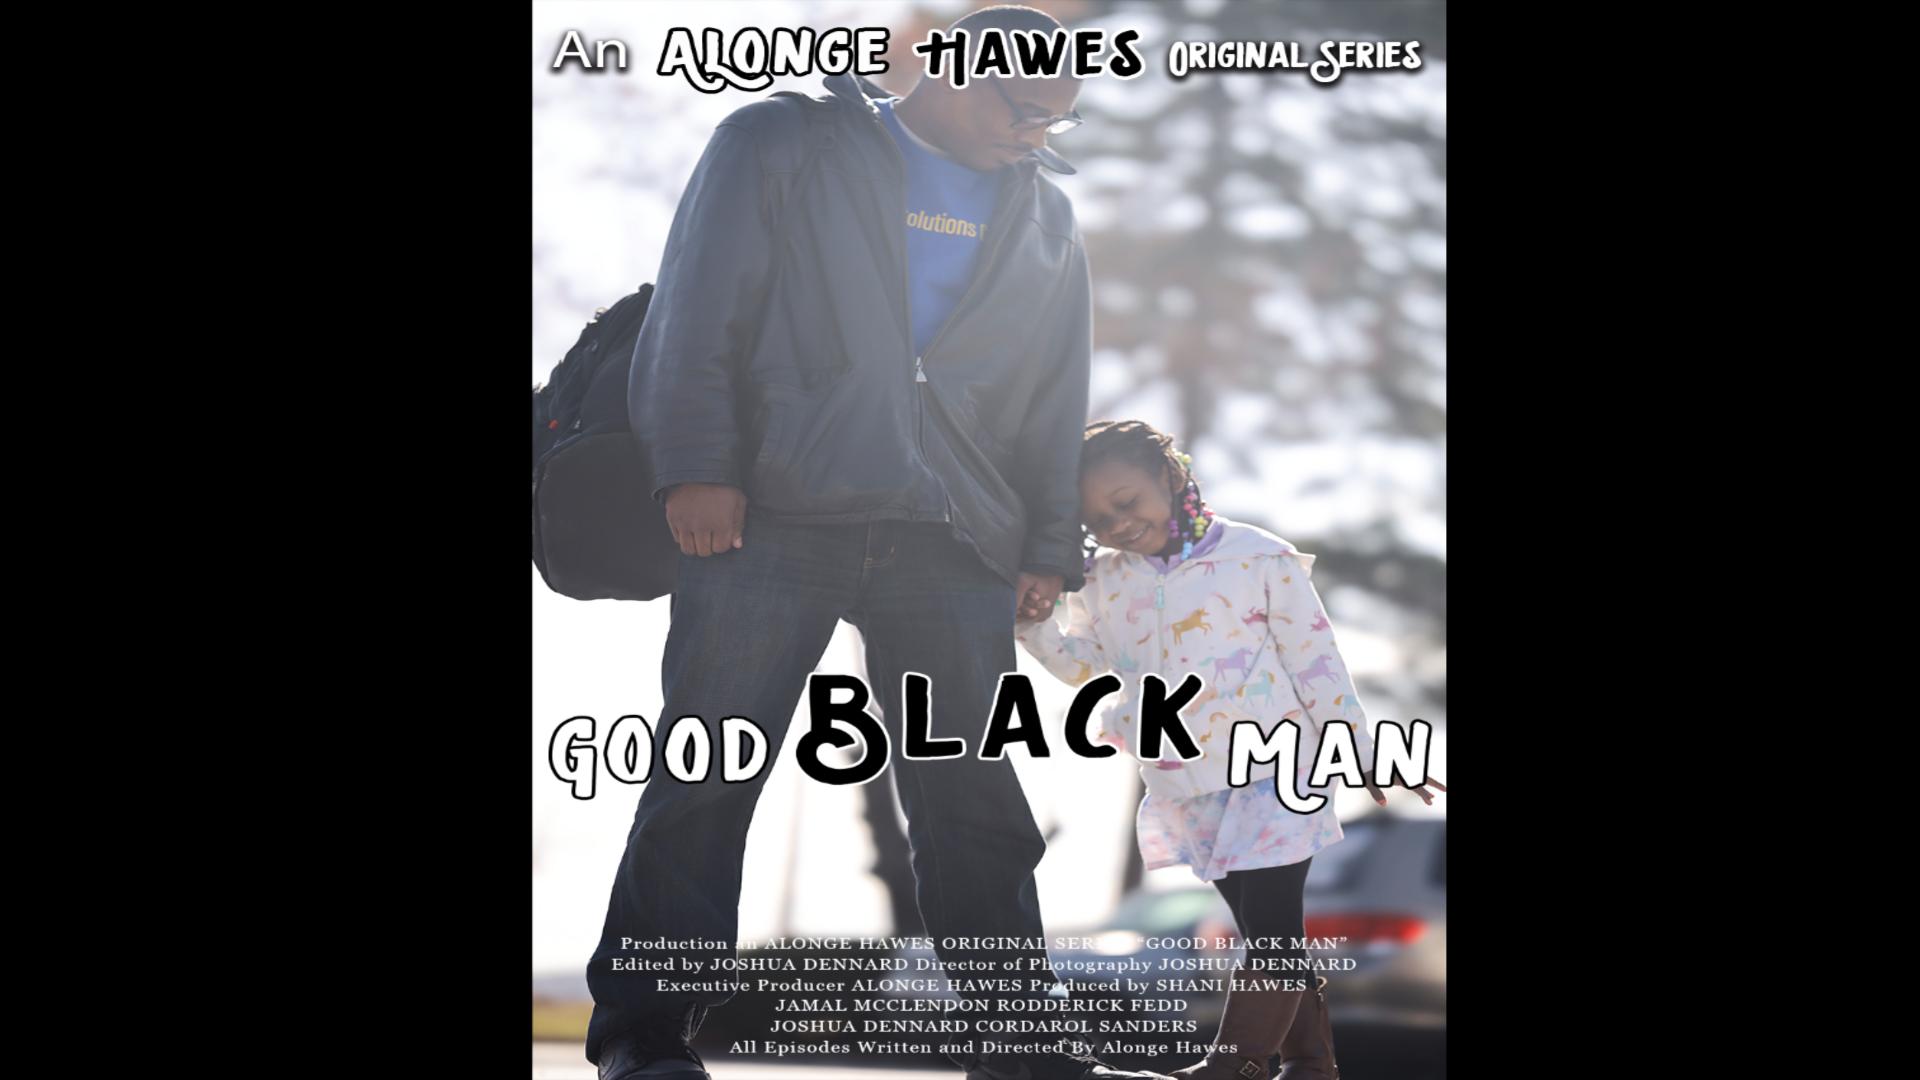 Good Black Man